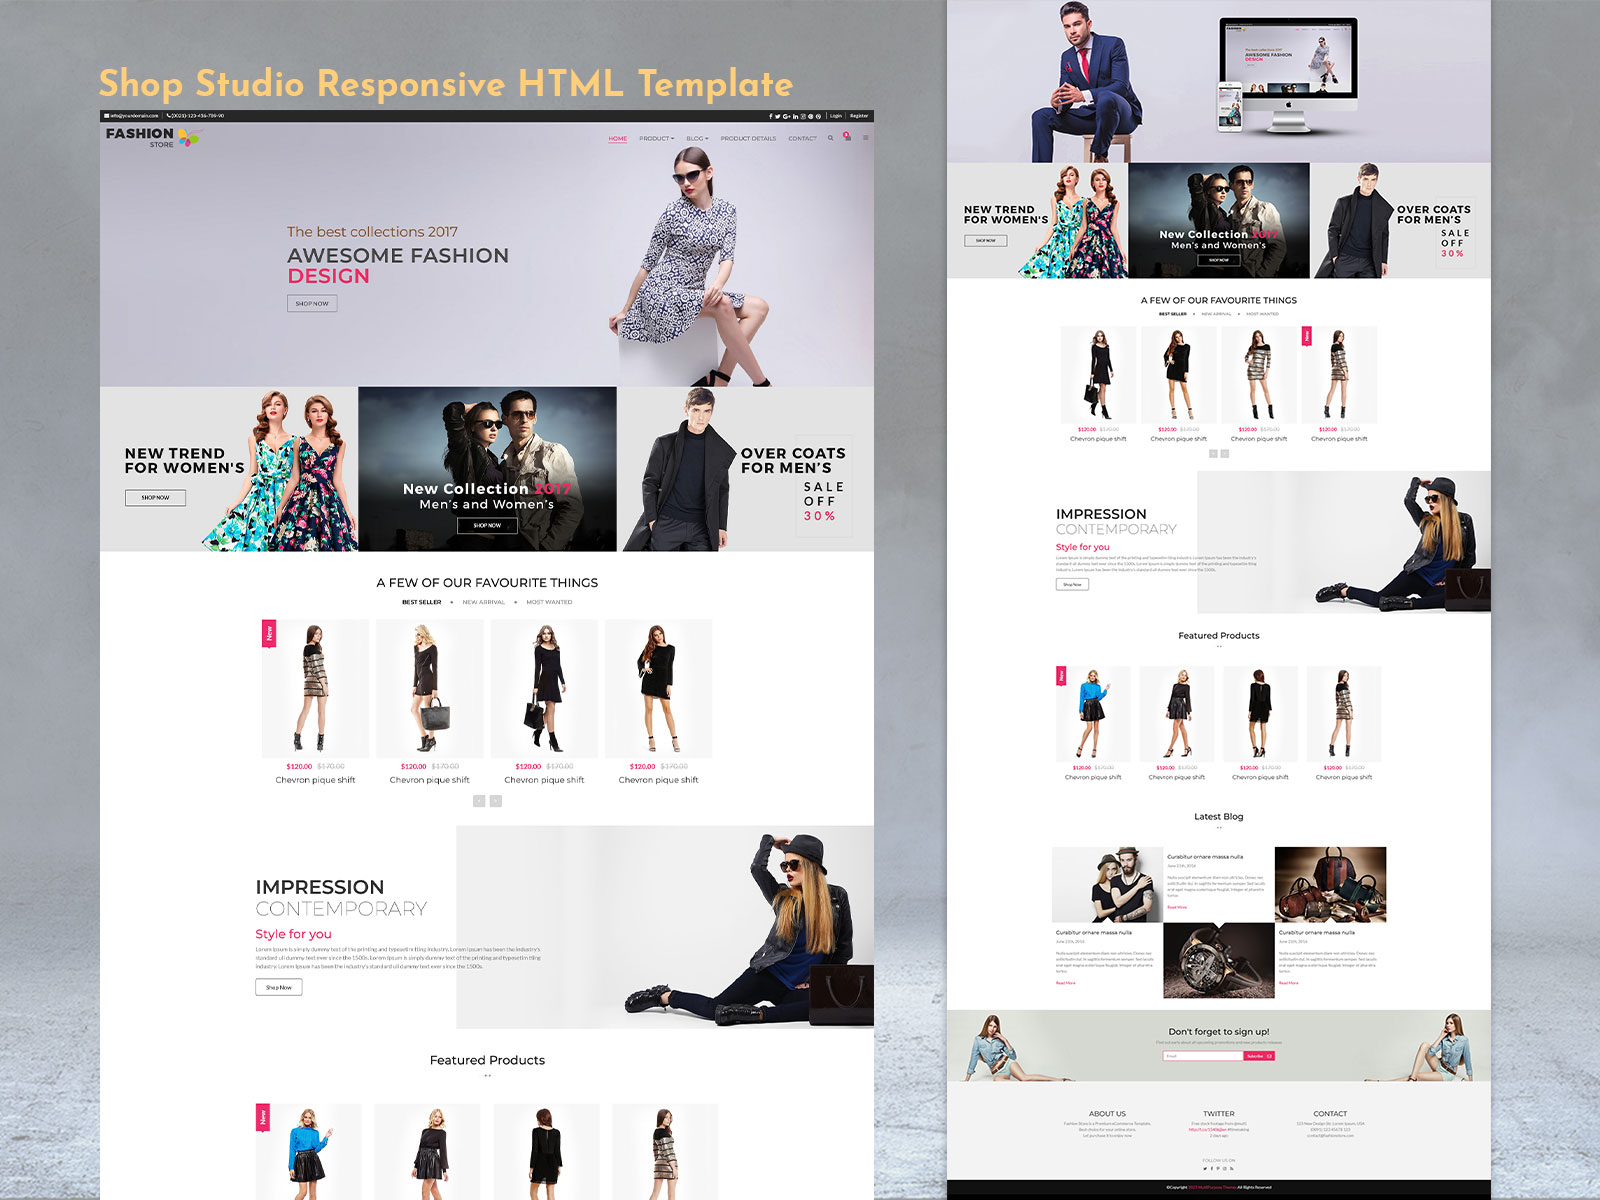 Shop Studio – A Responsive HTML Template For Your Dream Website